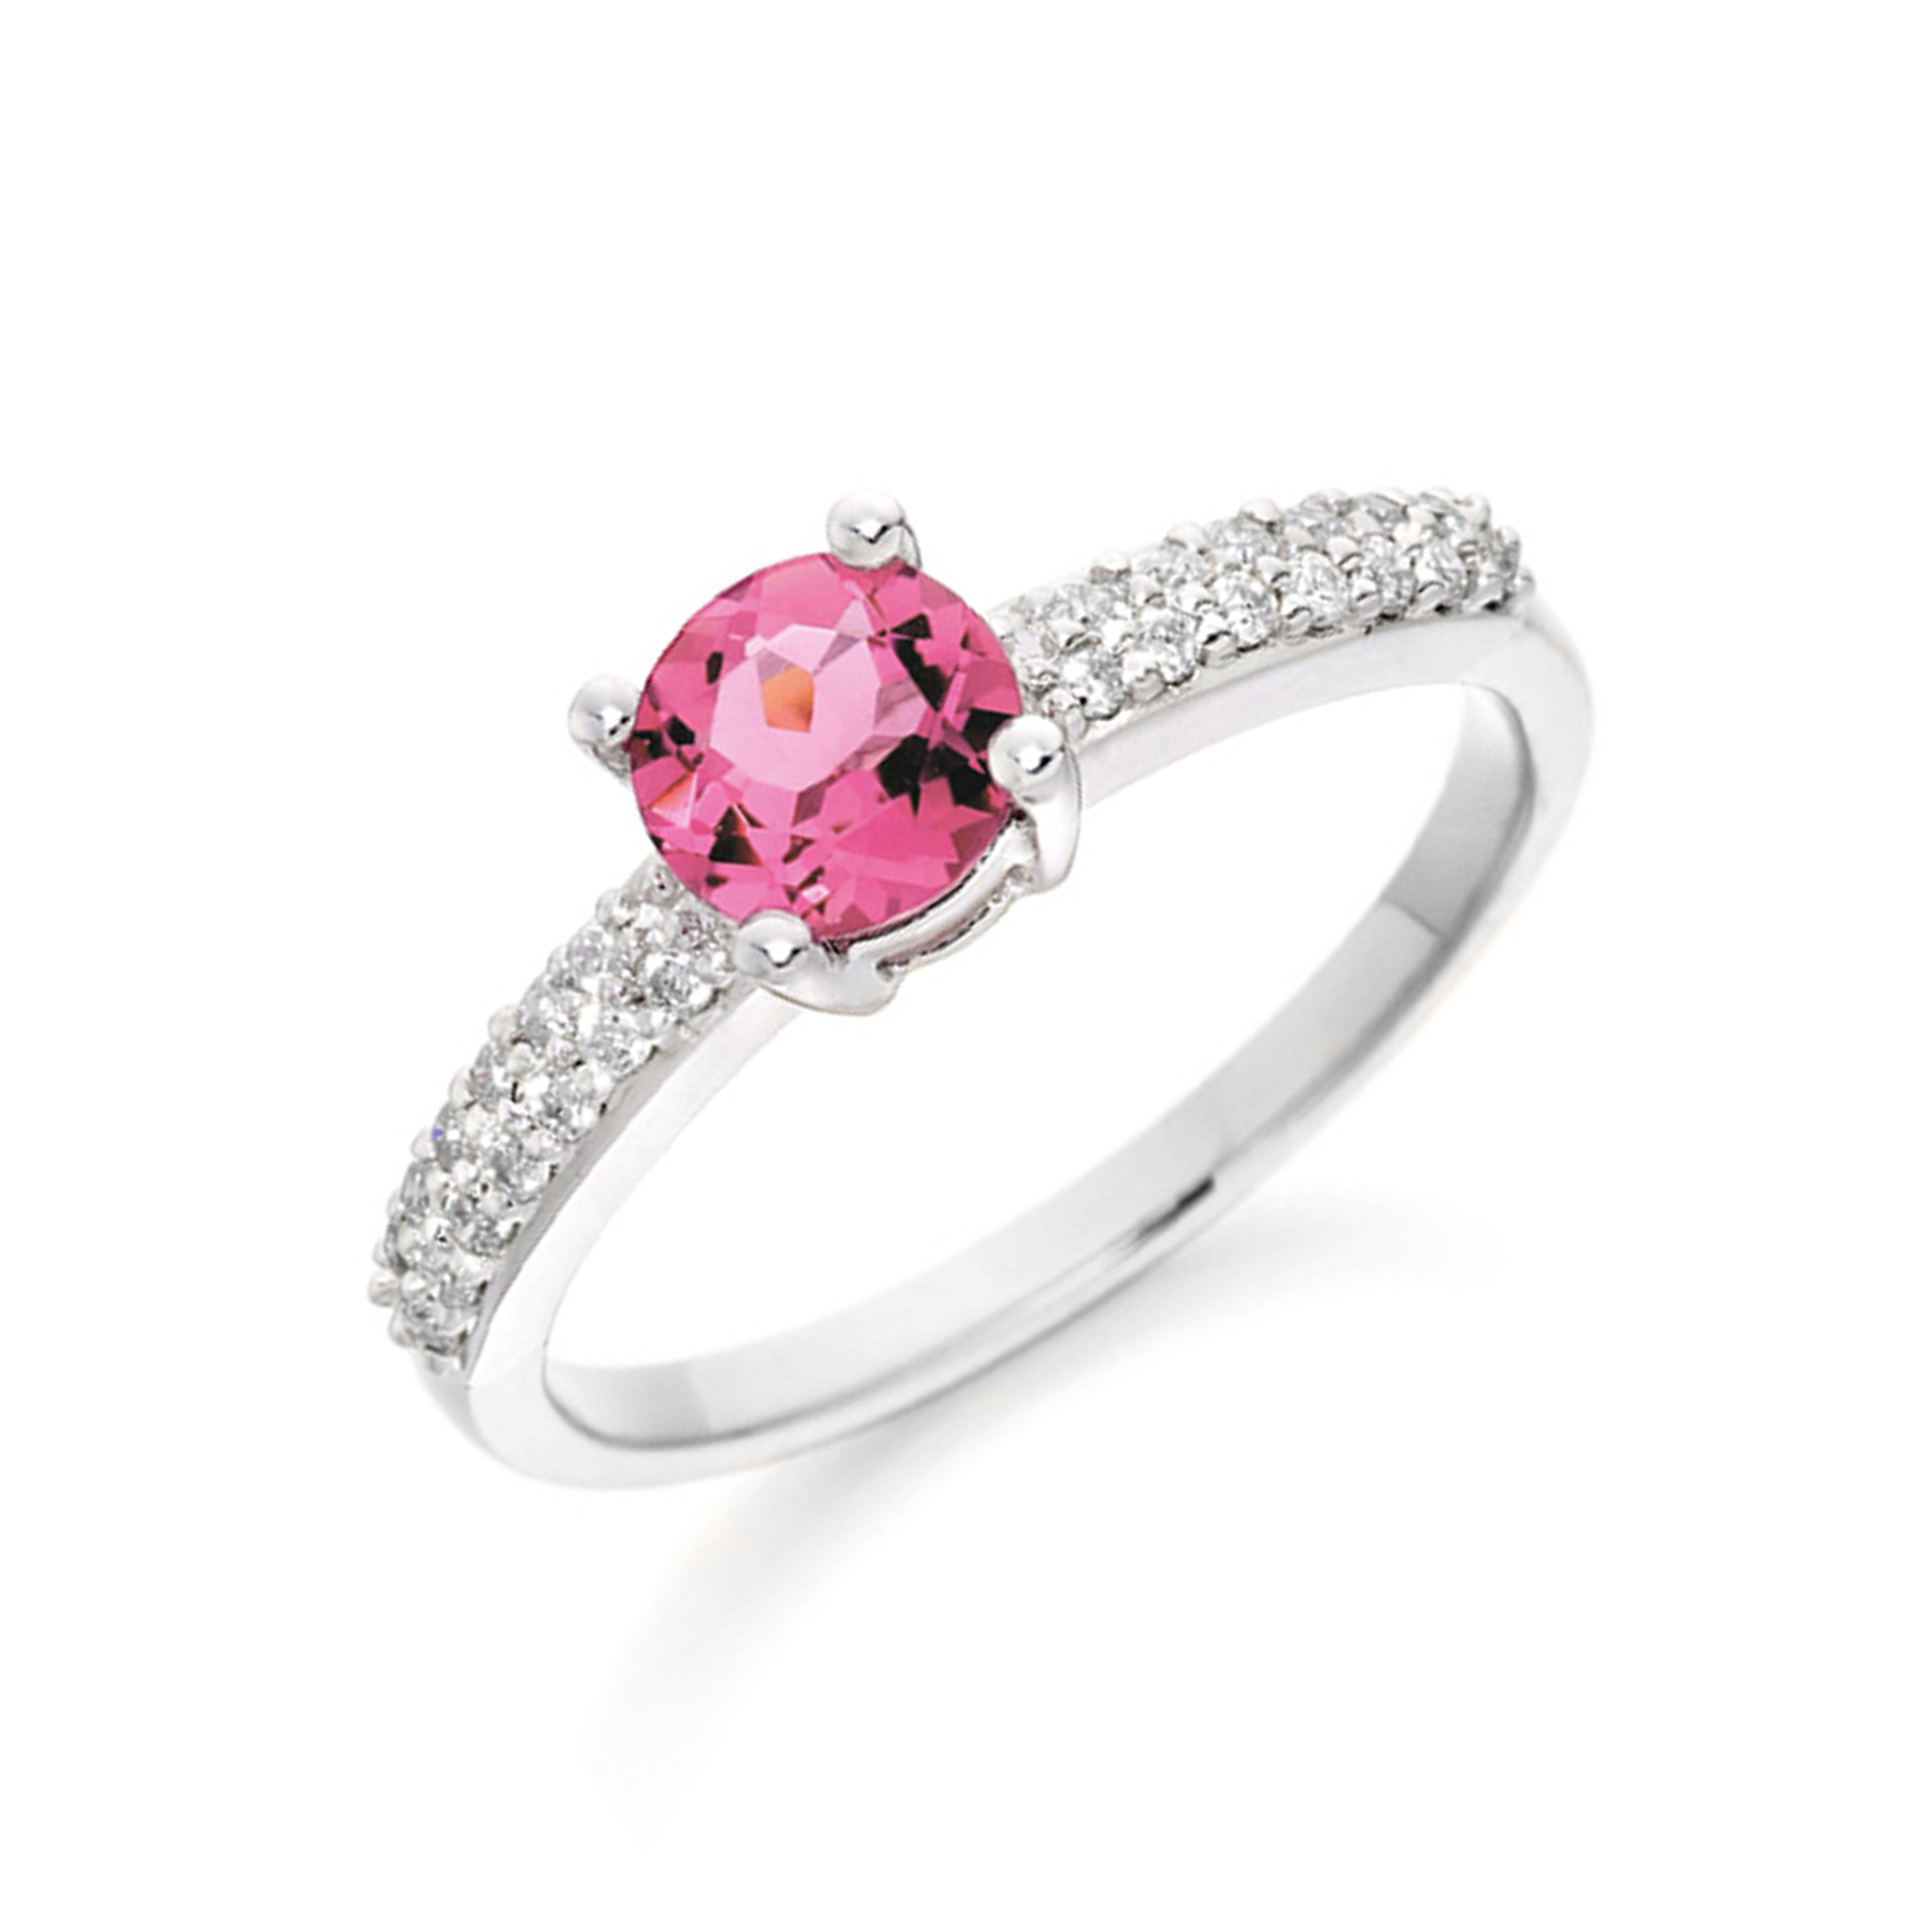 6.5mm Round Pink Tourmaline Stones On Shoulder Diamond And Gemstone Engagement Ring